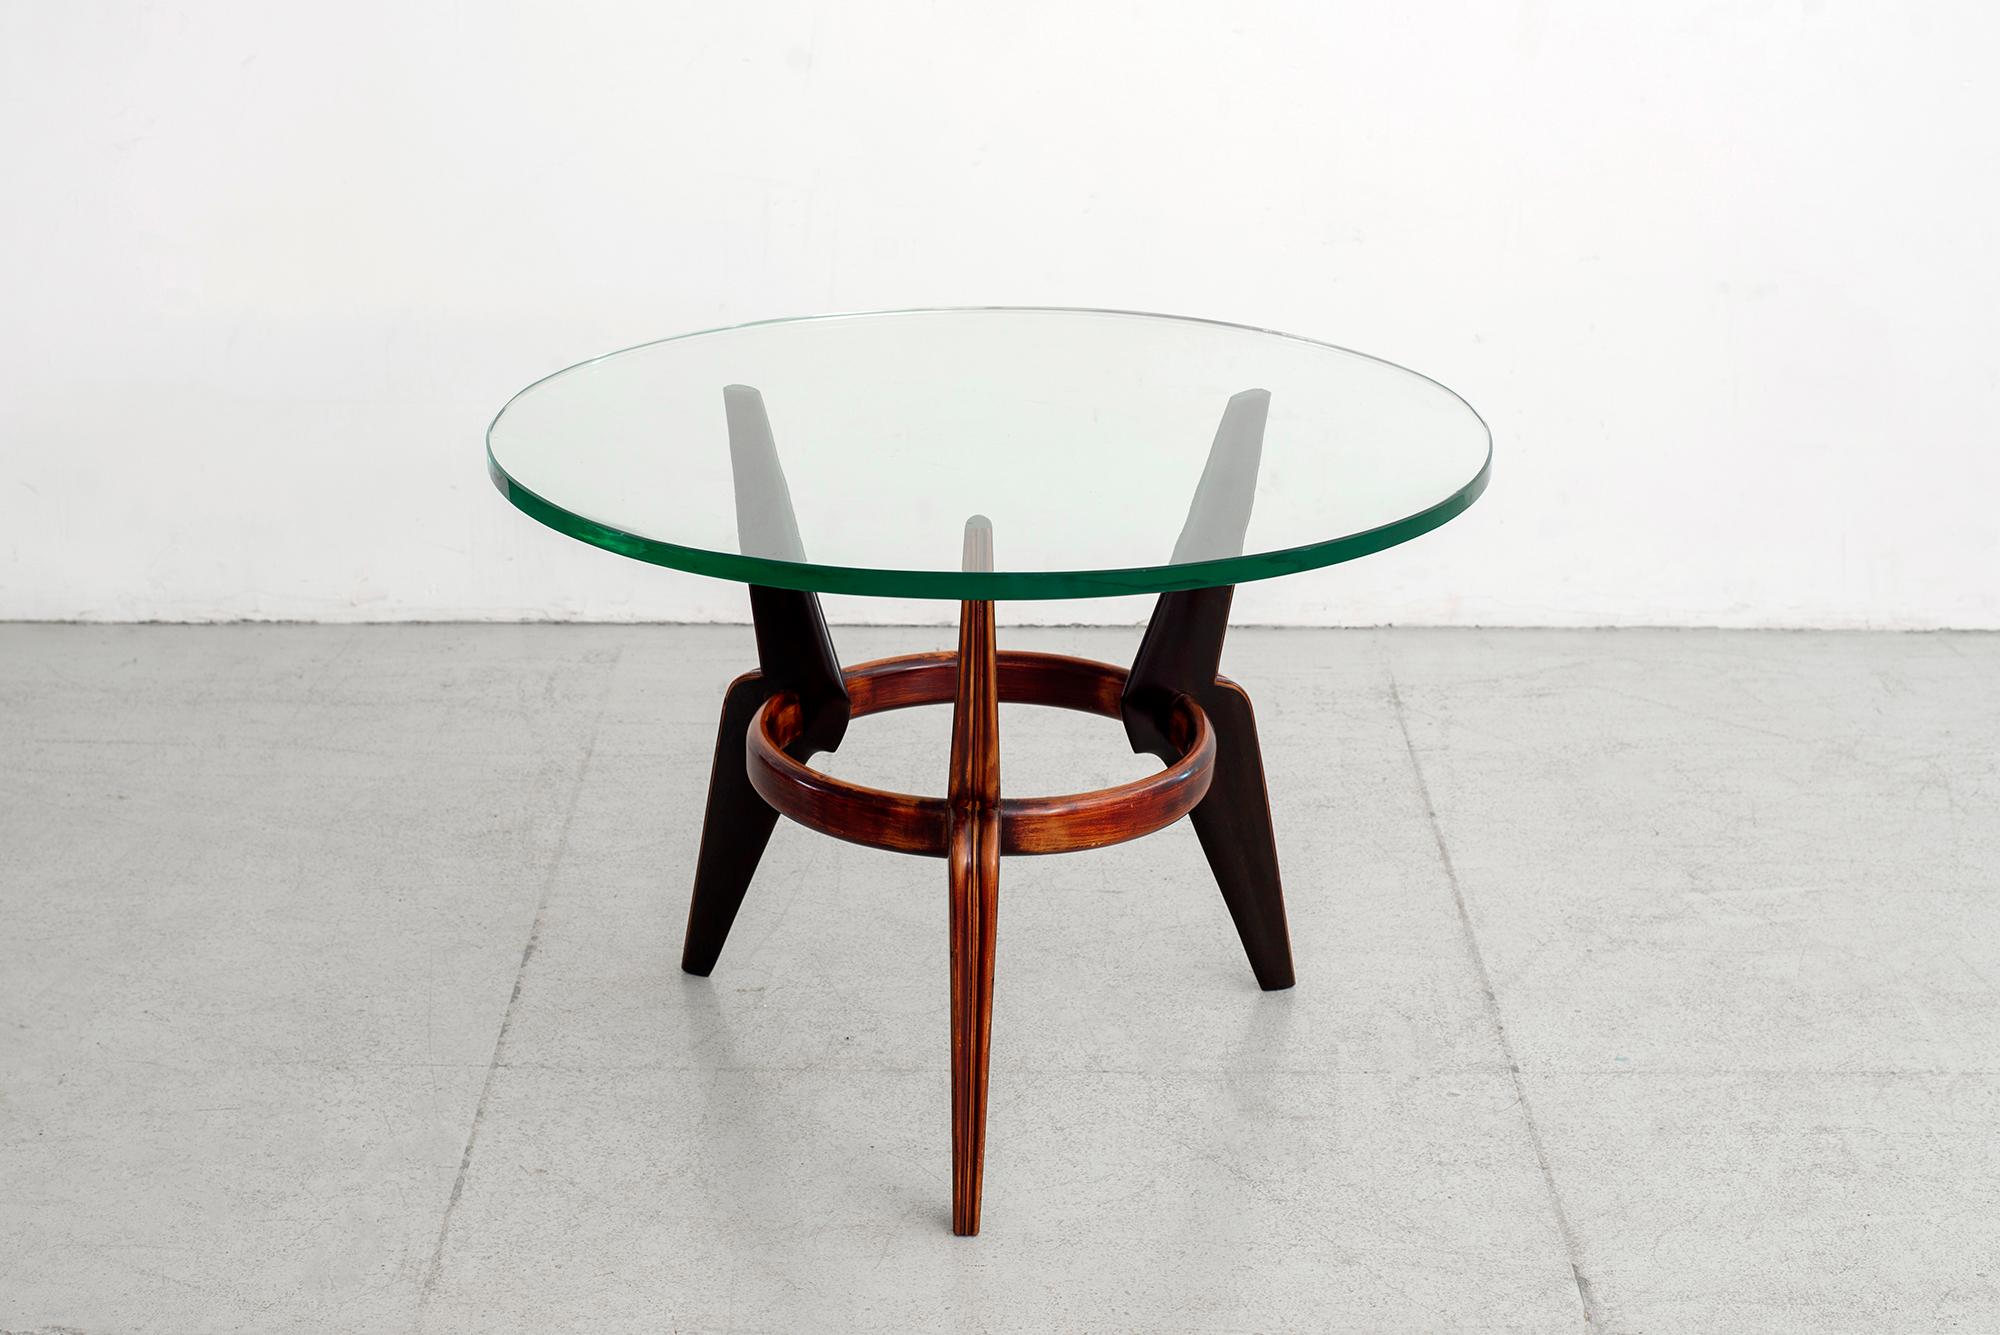 Beautiful 1940s Italian circular coffee table with three legs and glass top. 
Mahogany wood with wonderful original finish.